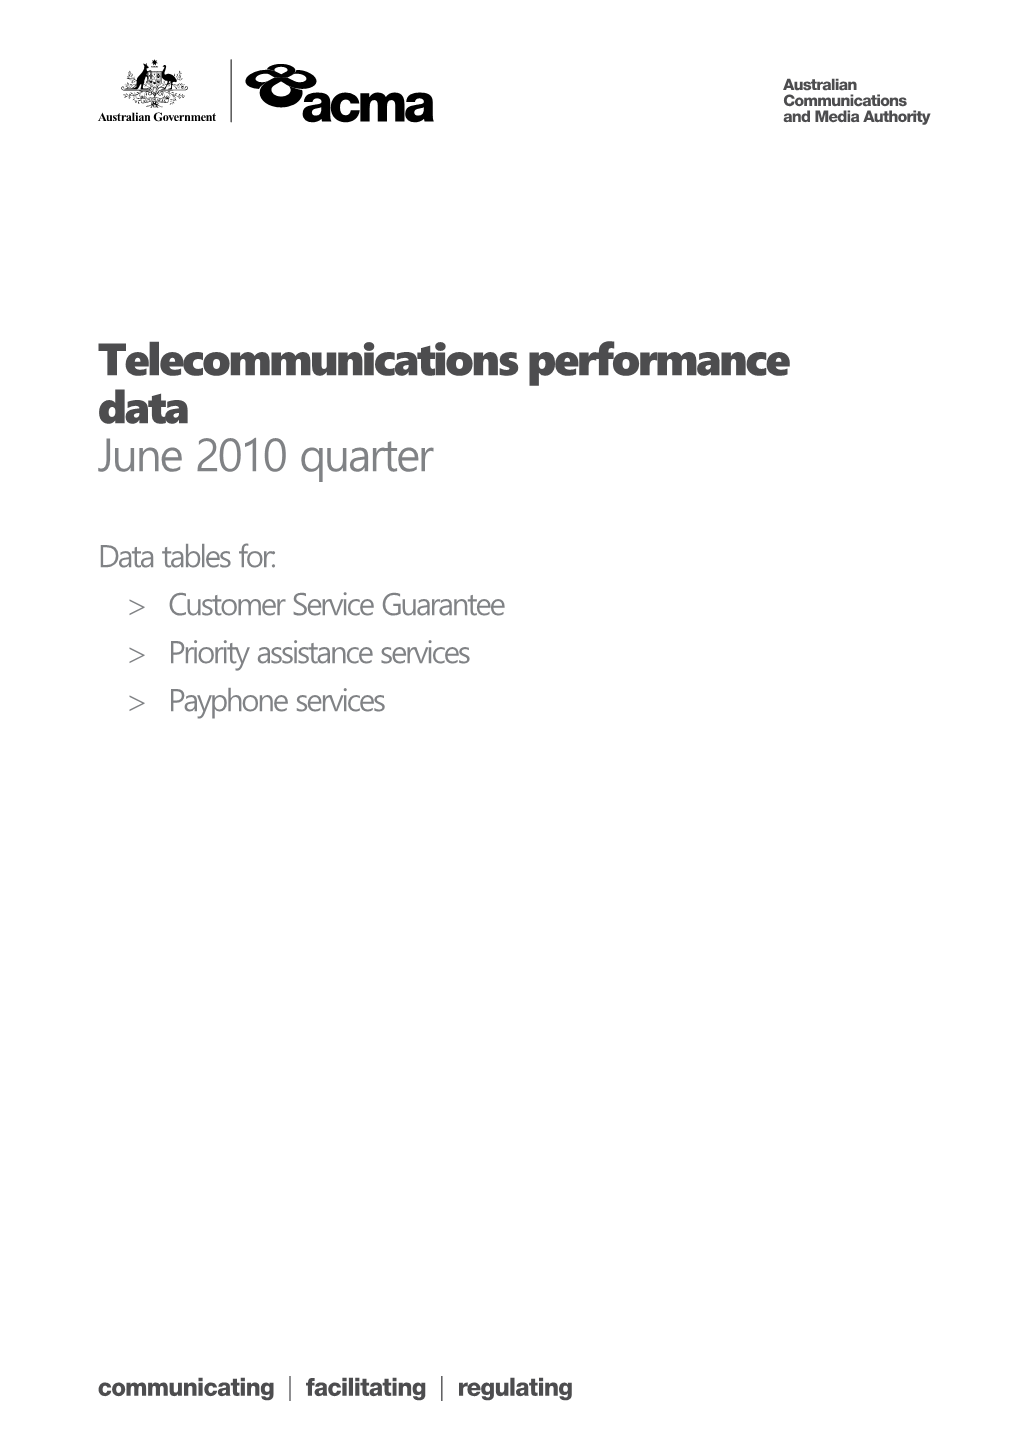 Telecommunications Performance Data - June 2010 Quarter